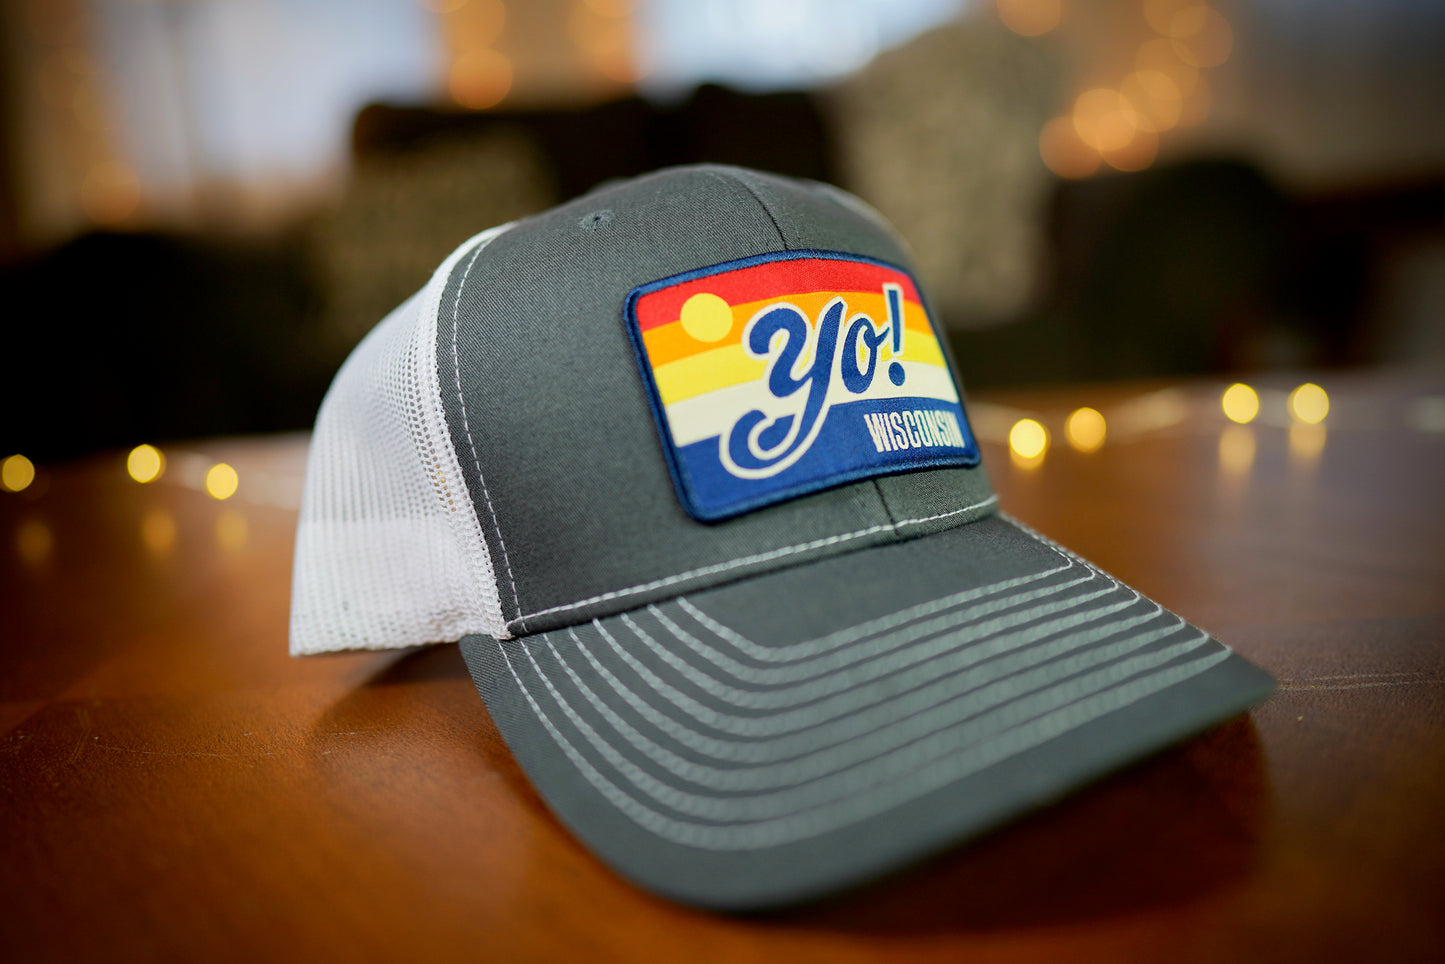 "YO! Wisconsin" Retro Design Trucker Hat (White Mesh/ Charcoal Fabric)